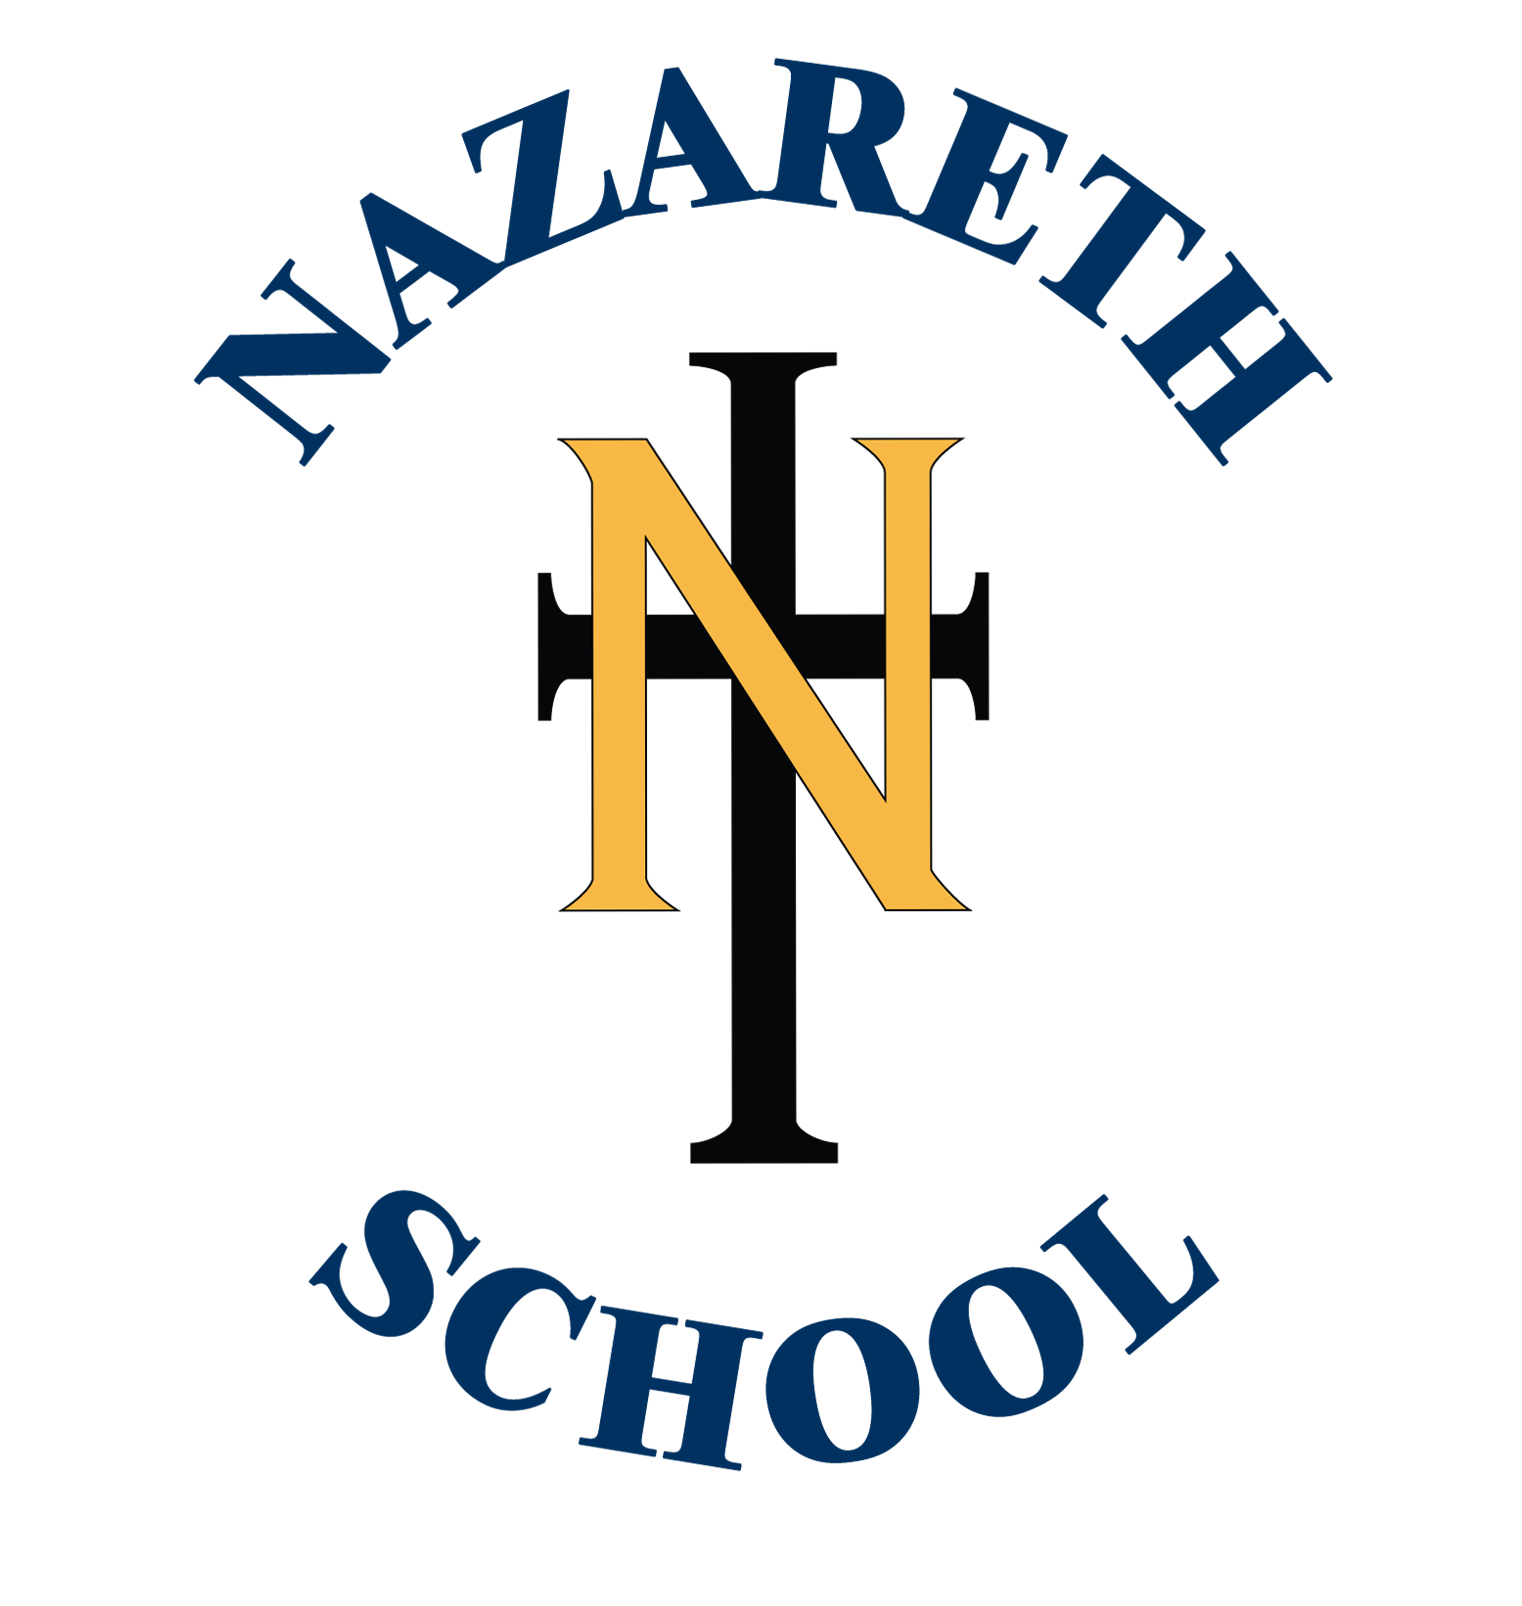 Nazareth School of San Diego Home page 